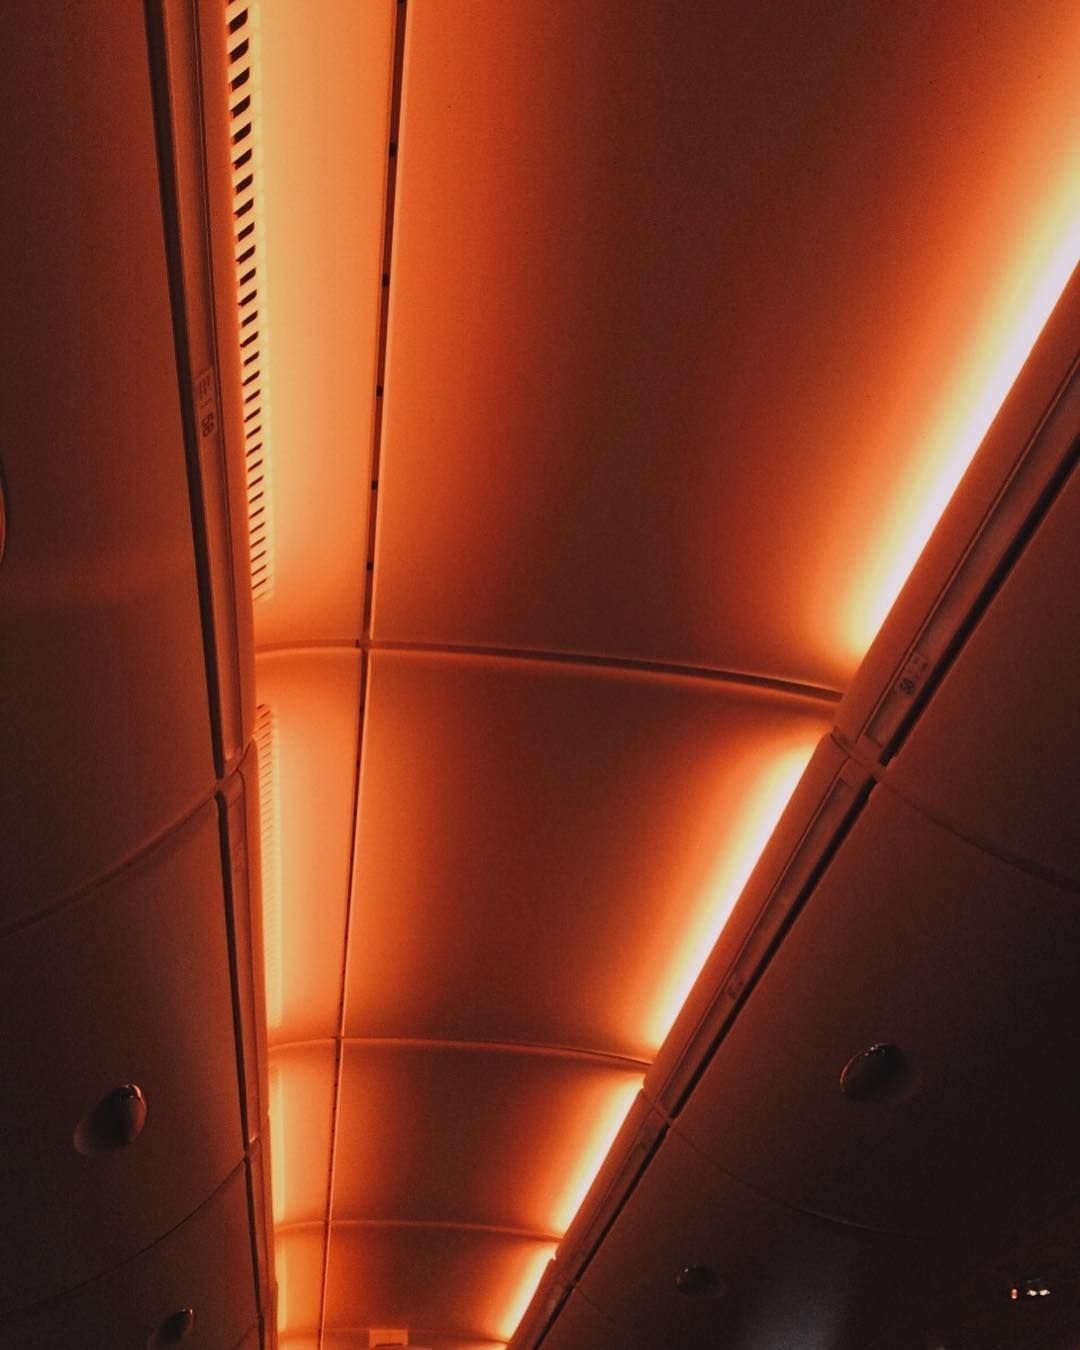 The ceiling of a train with orange lights. - Dark orange